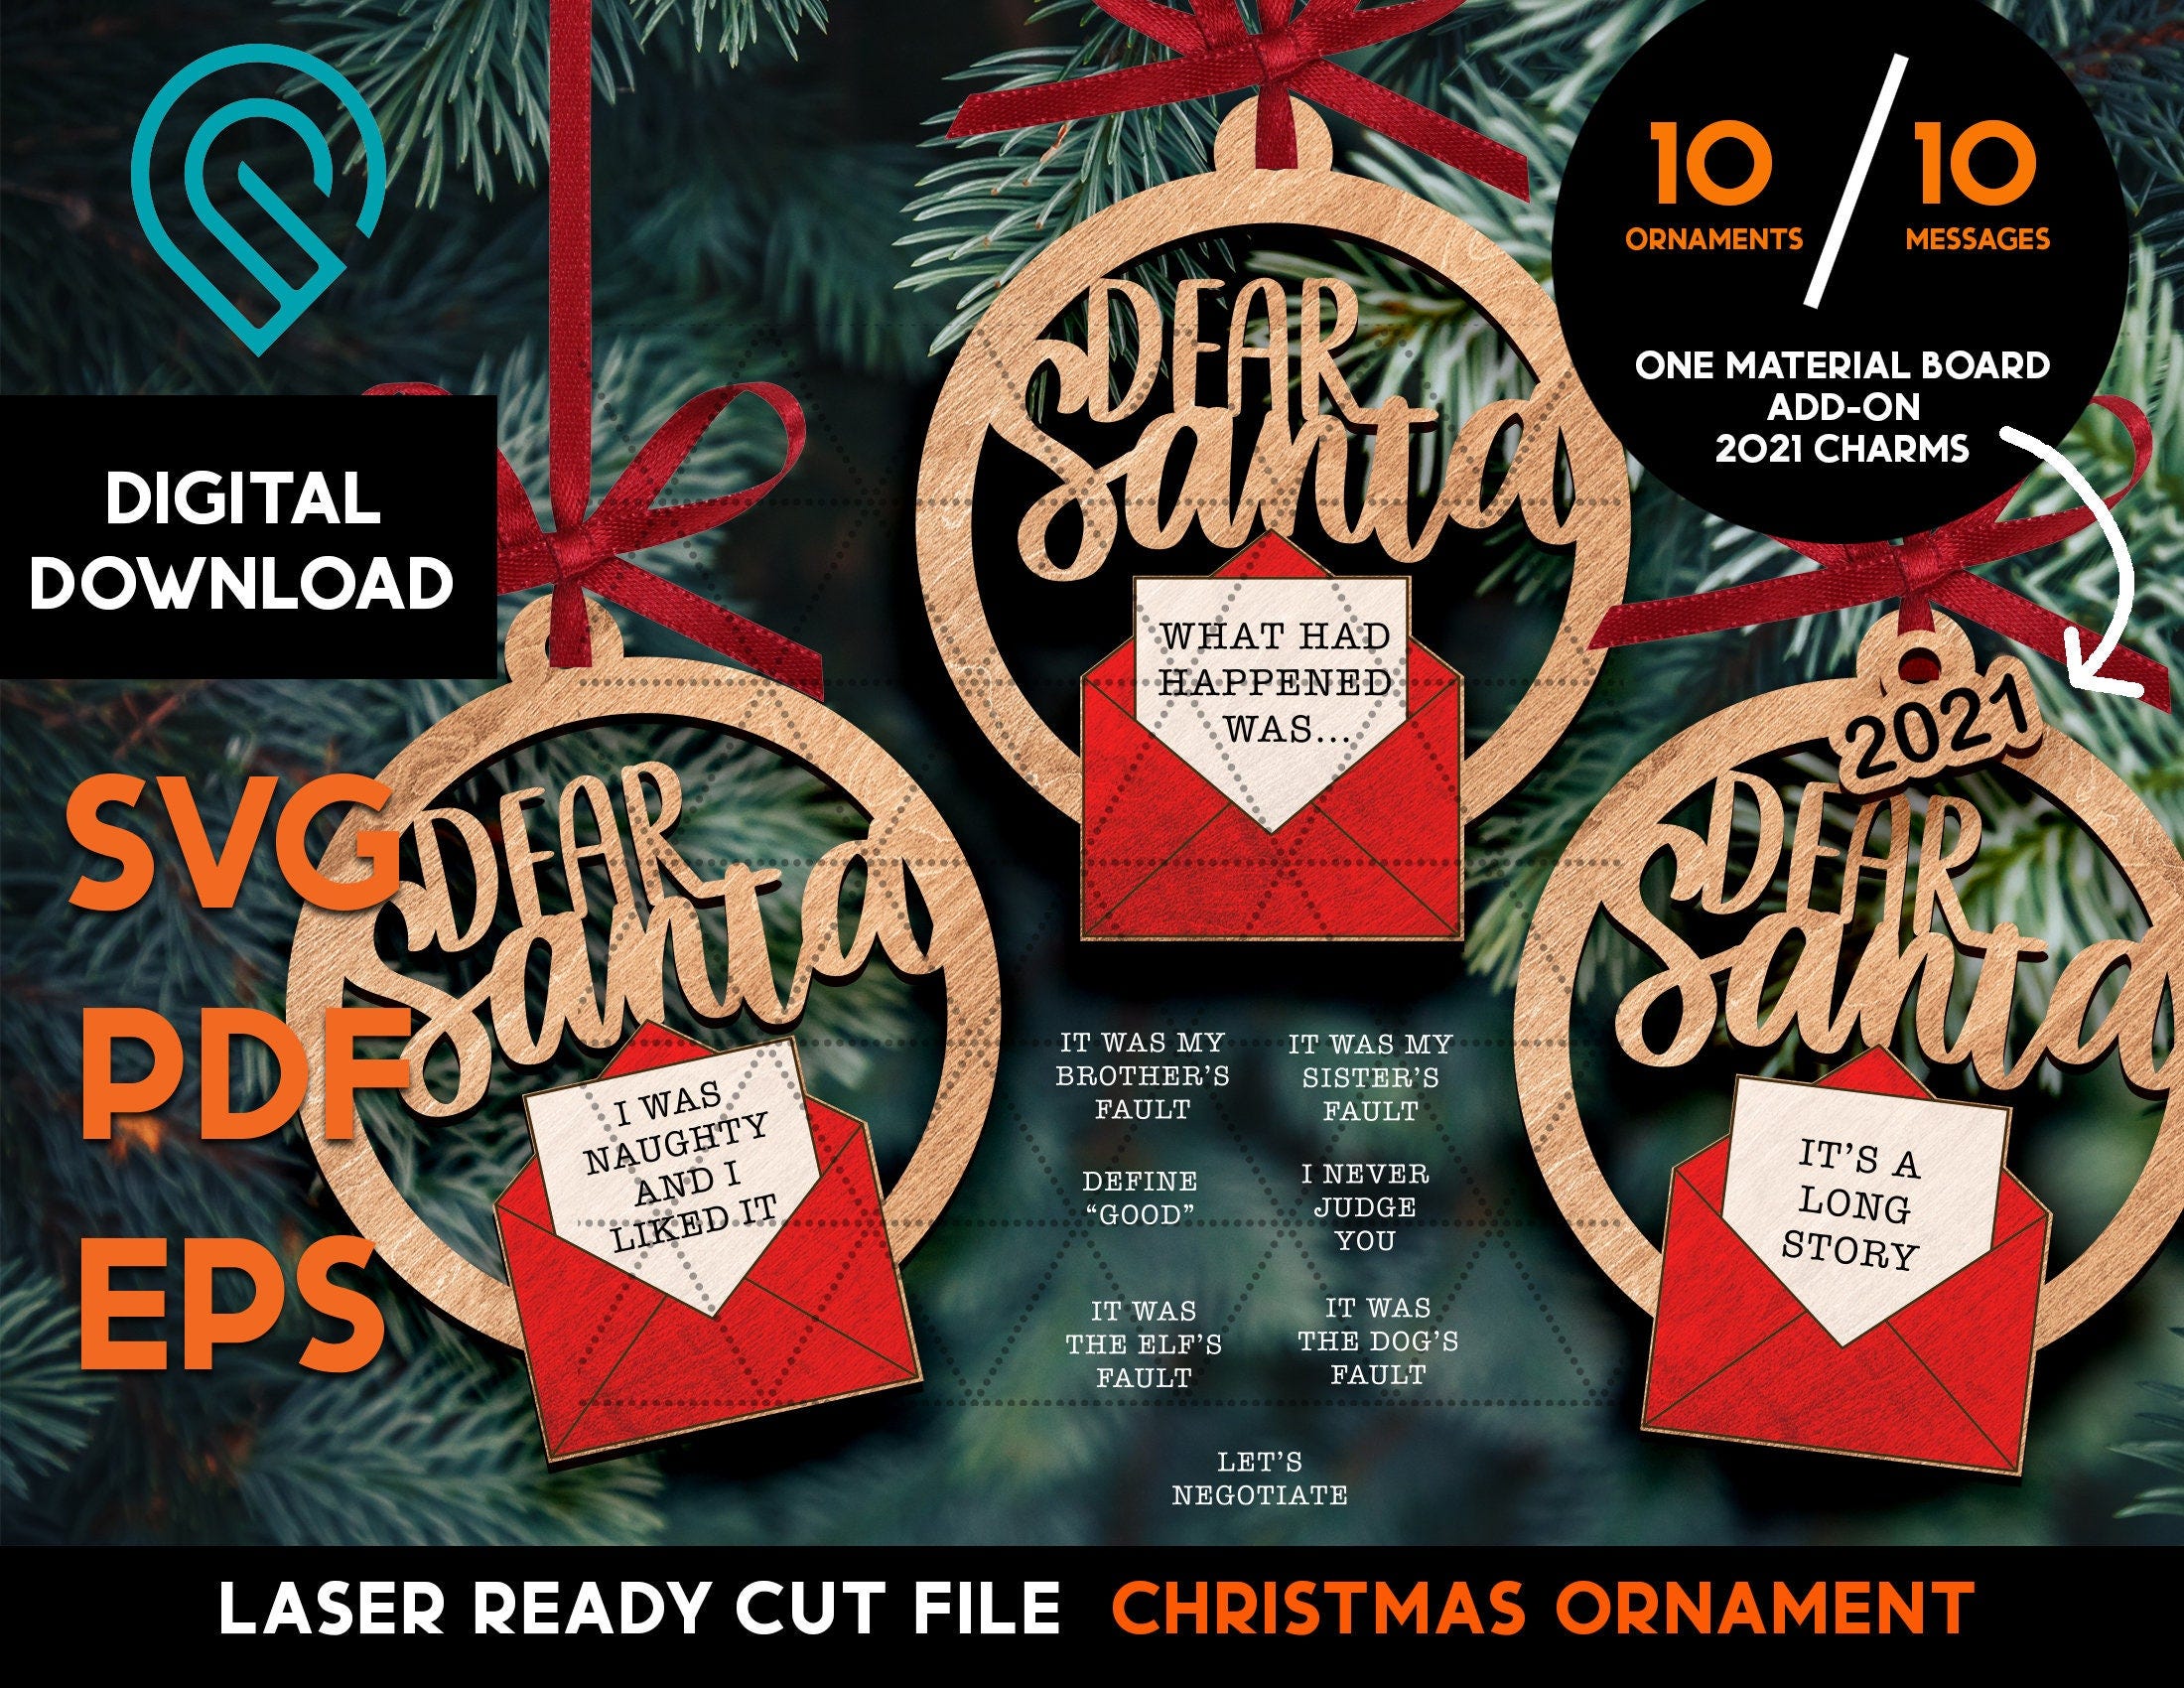 Dear Santa Funny Christmas Ornament Laser SVG Cut File – Glowforge Ready – Cut and Score – Naughty, Sarcasm